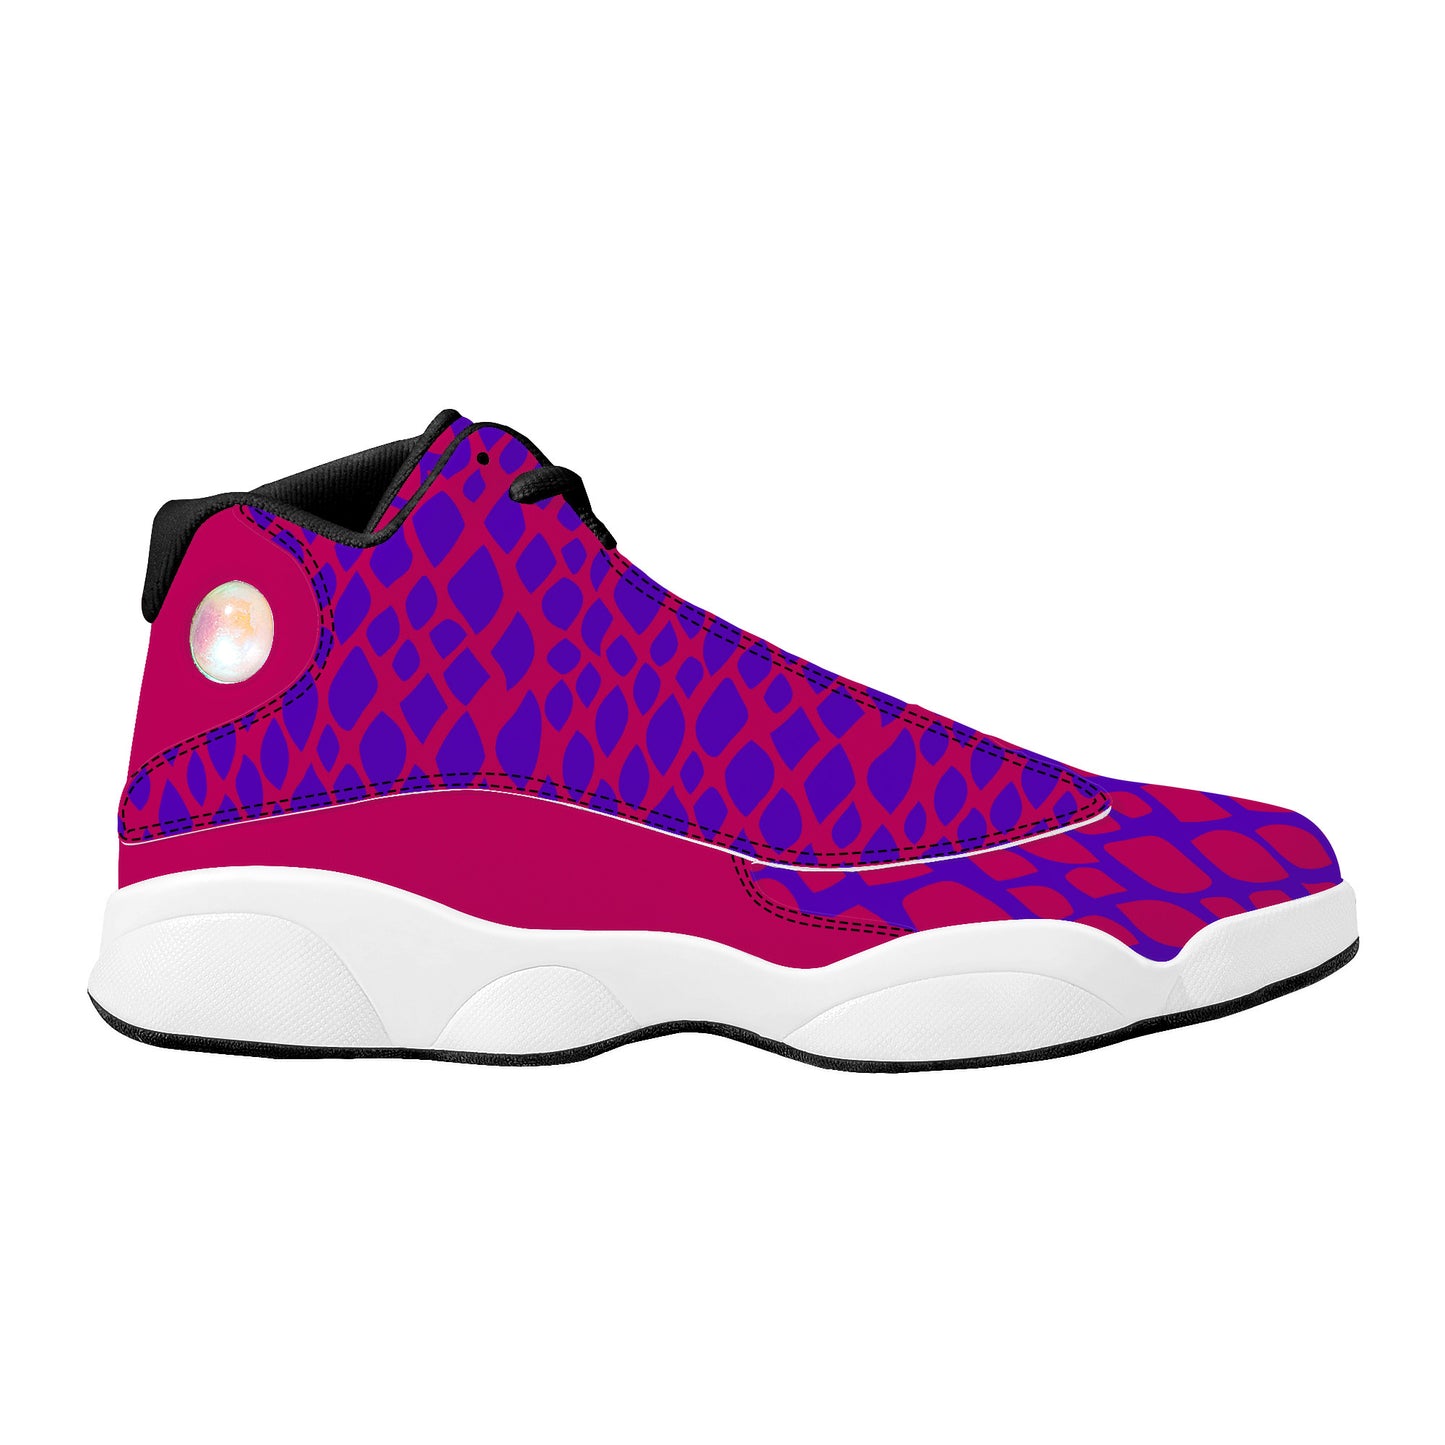 "Snake" Basketball Shoes